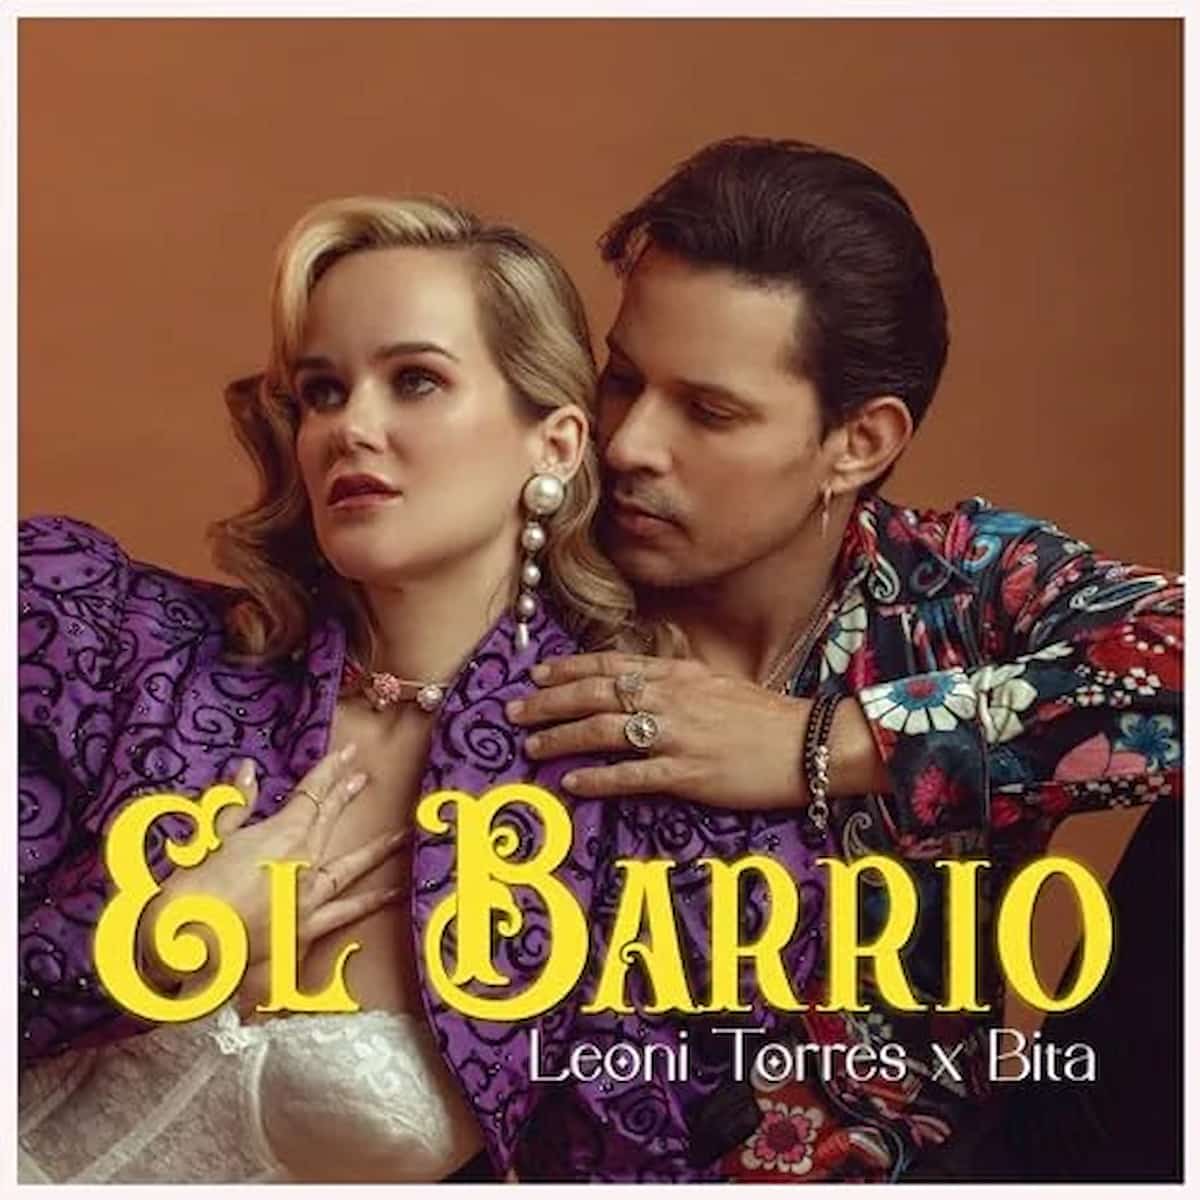 Leoni Torres & Bita “El Barrio” - Single-Cover